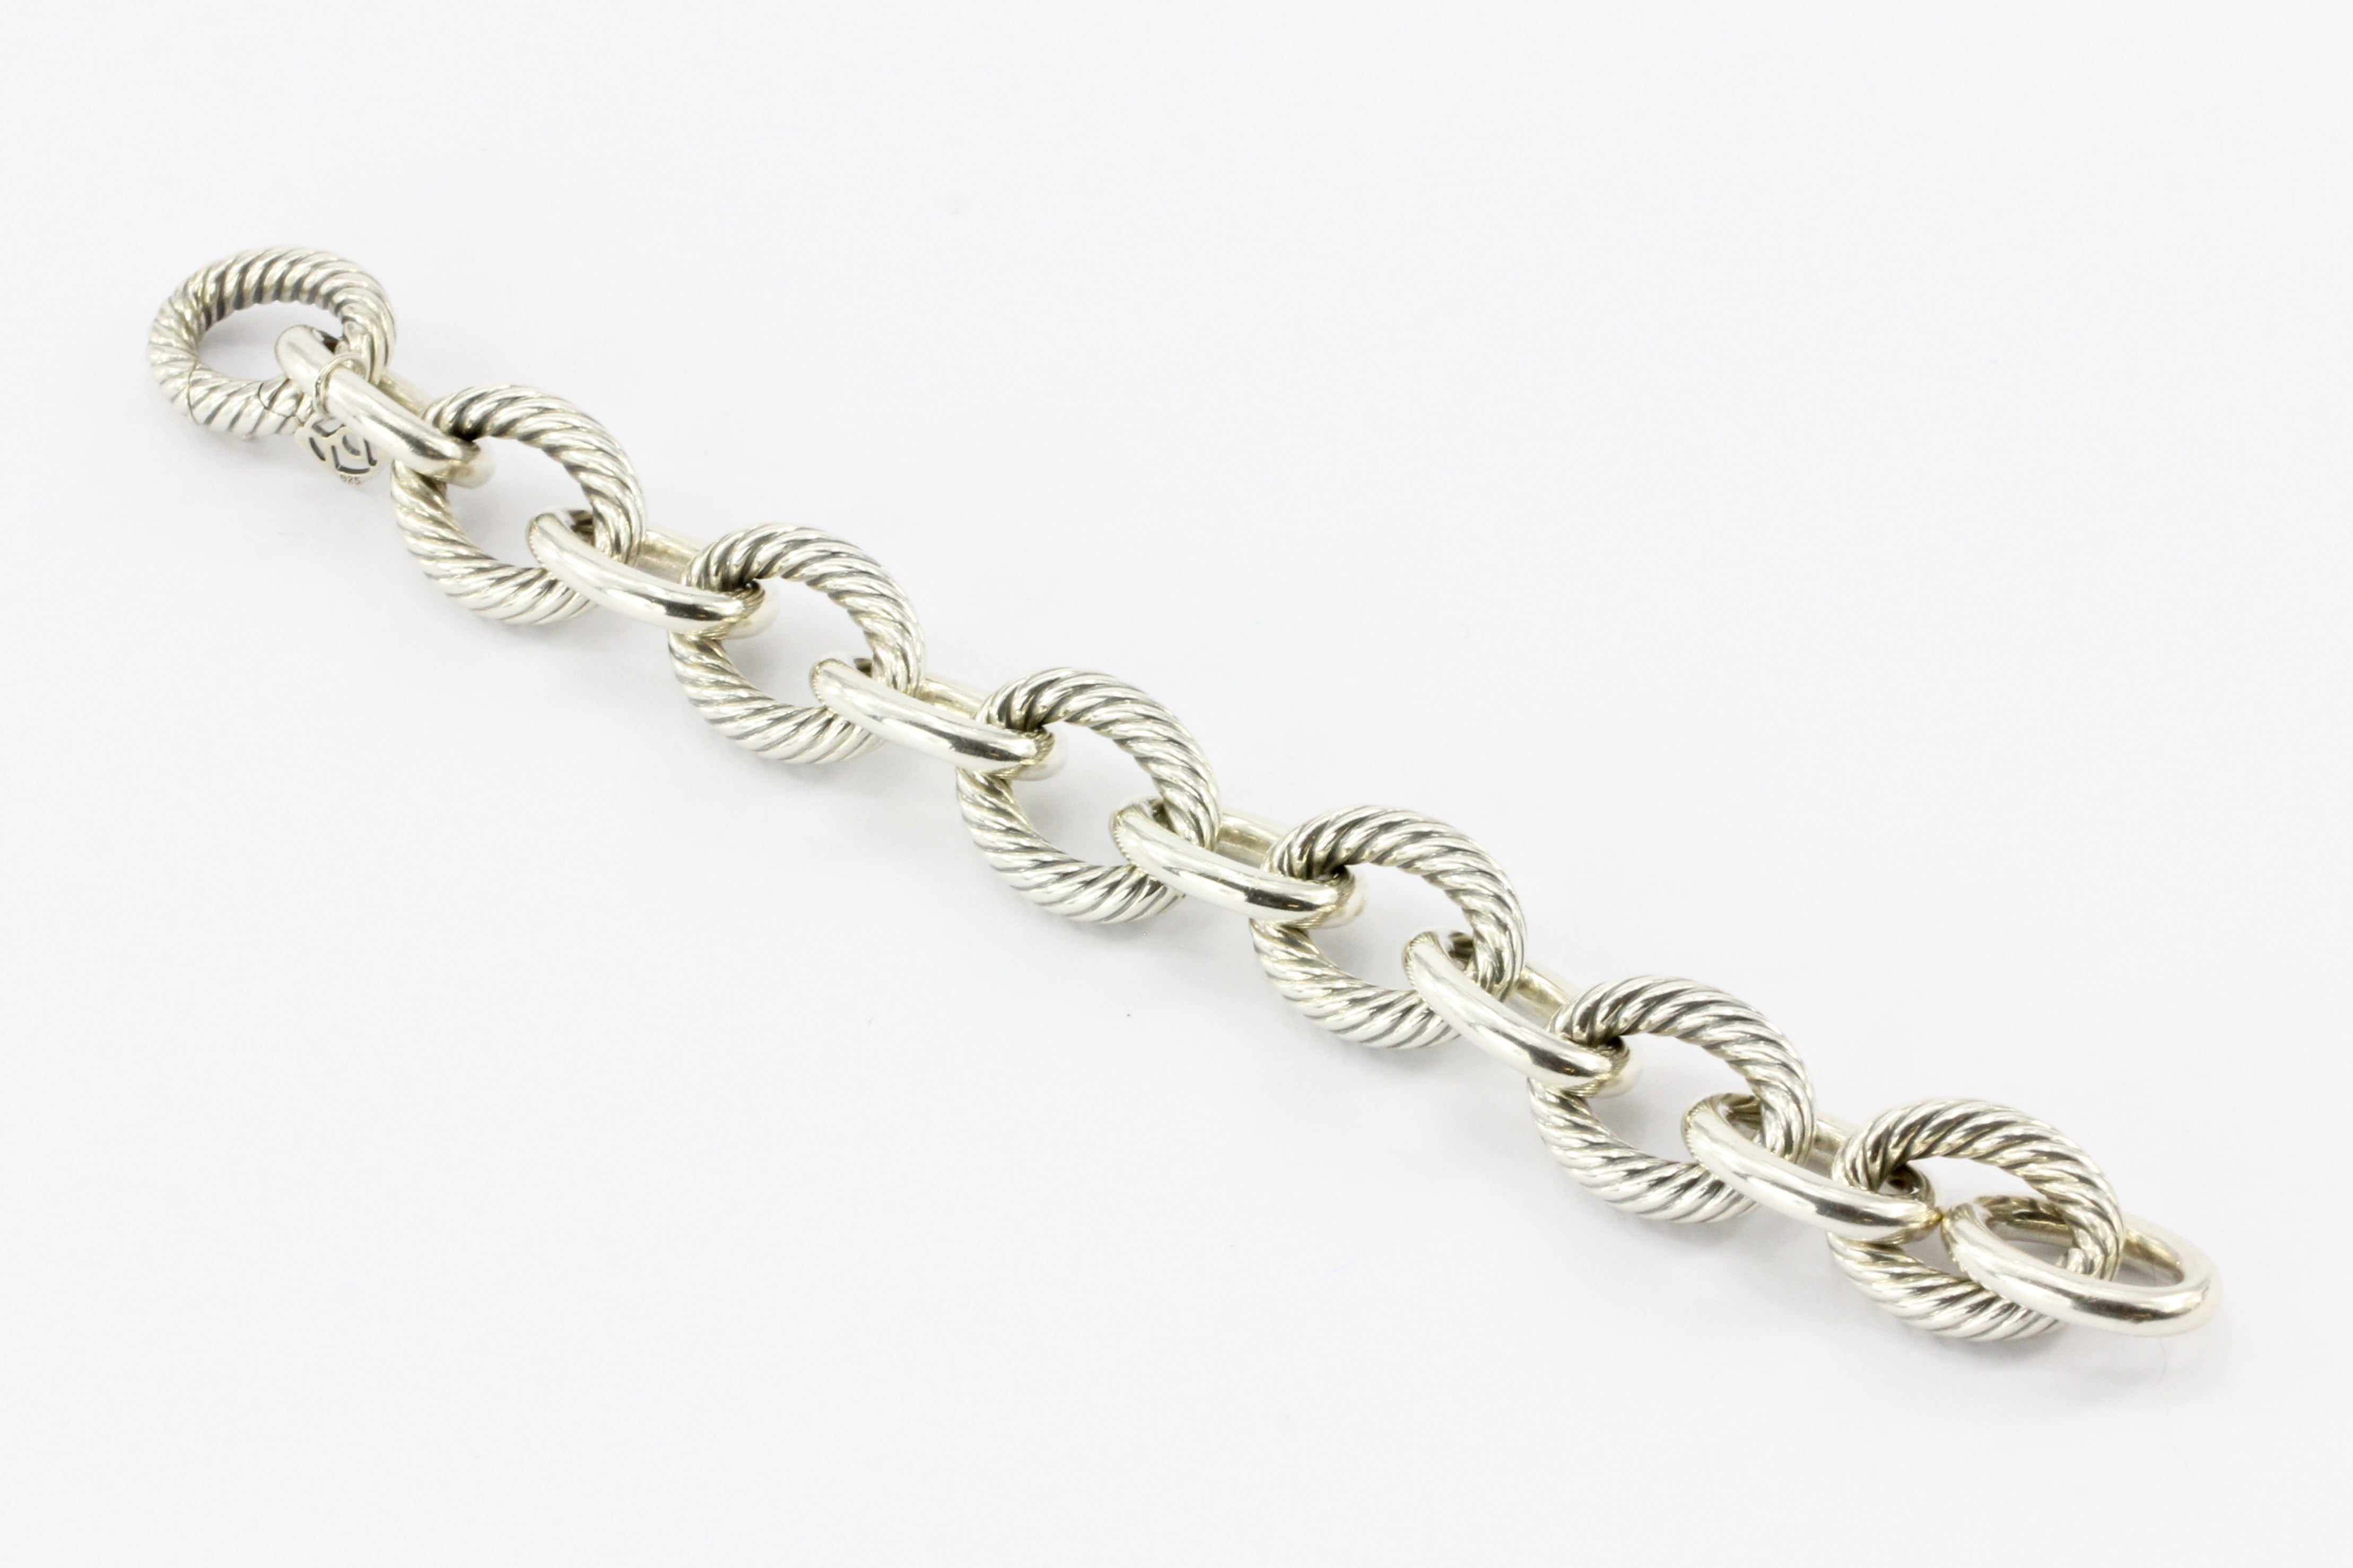 David Yurman Box Chain Necklace in 18K Gold, 1.7mm | Nordstrom